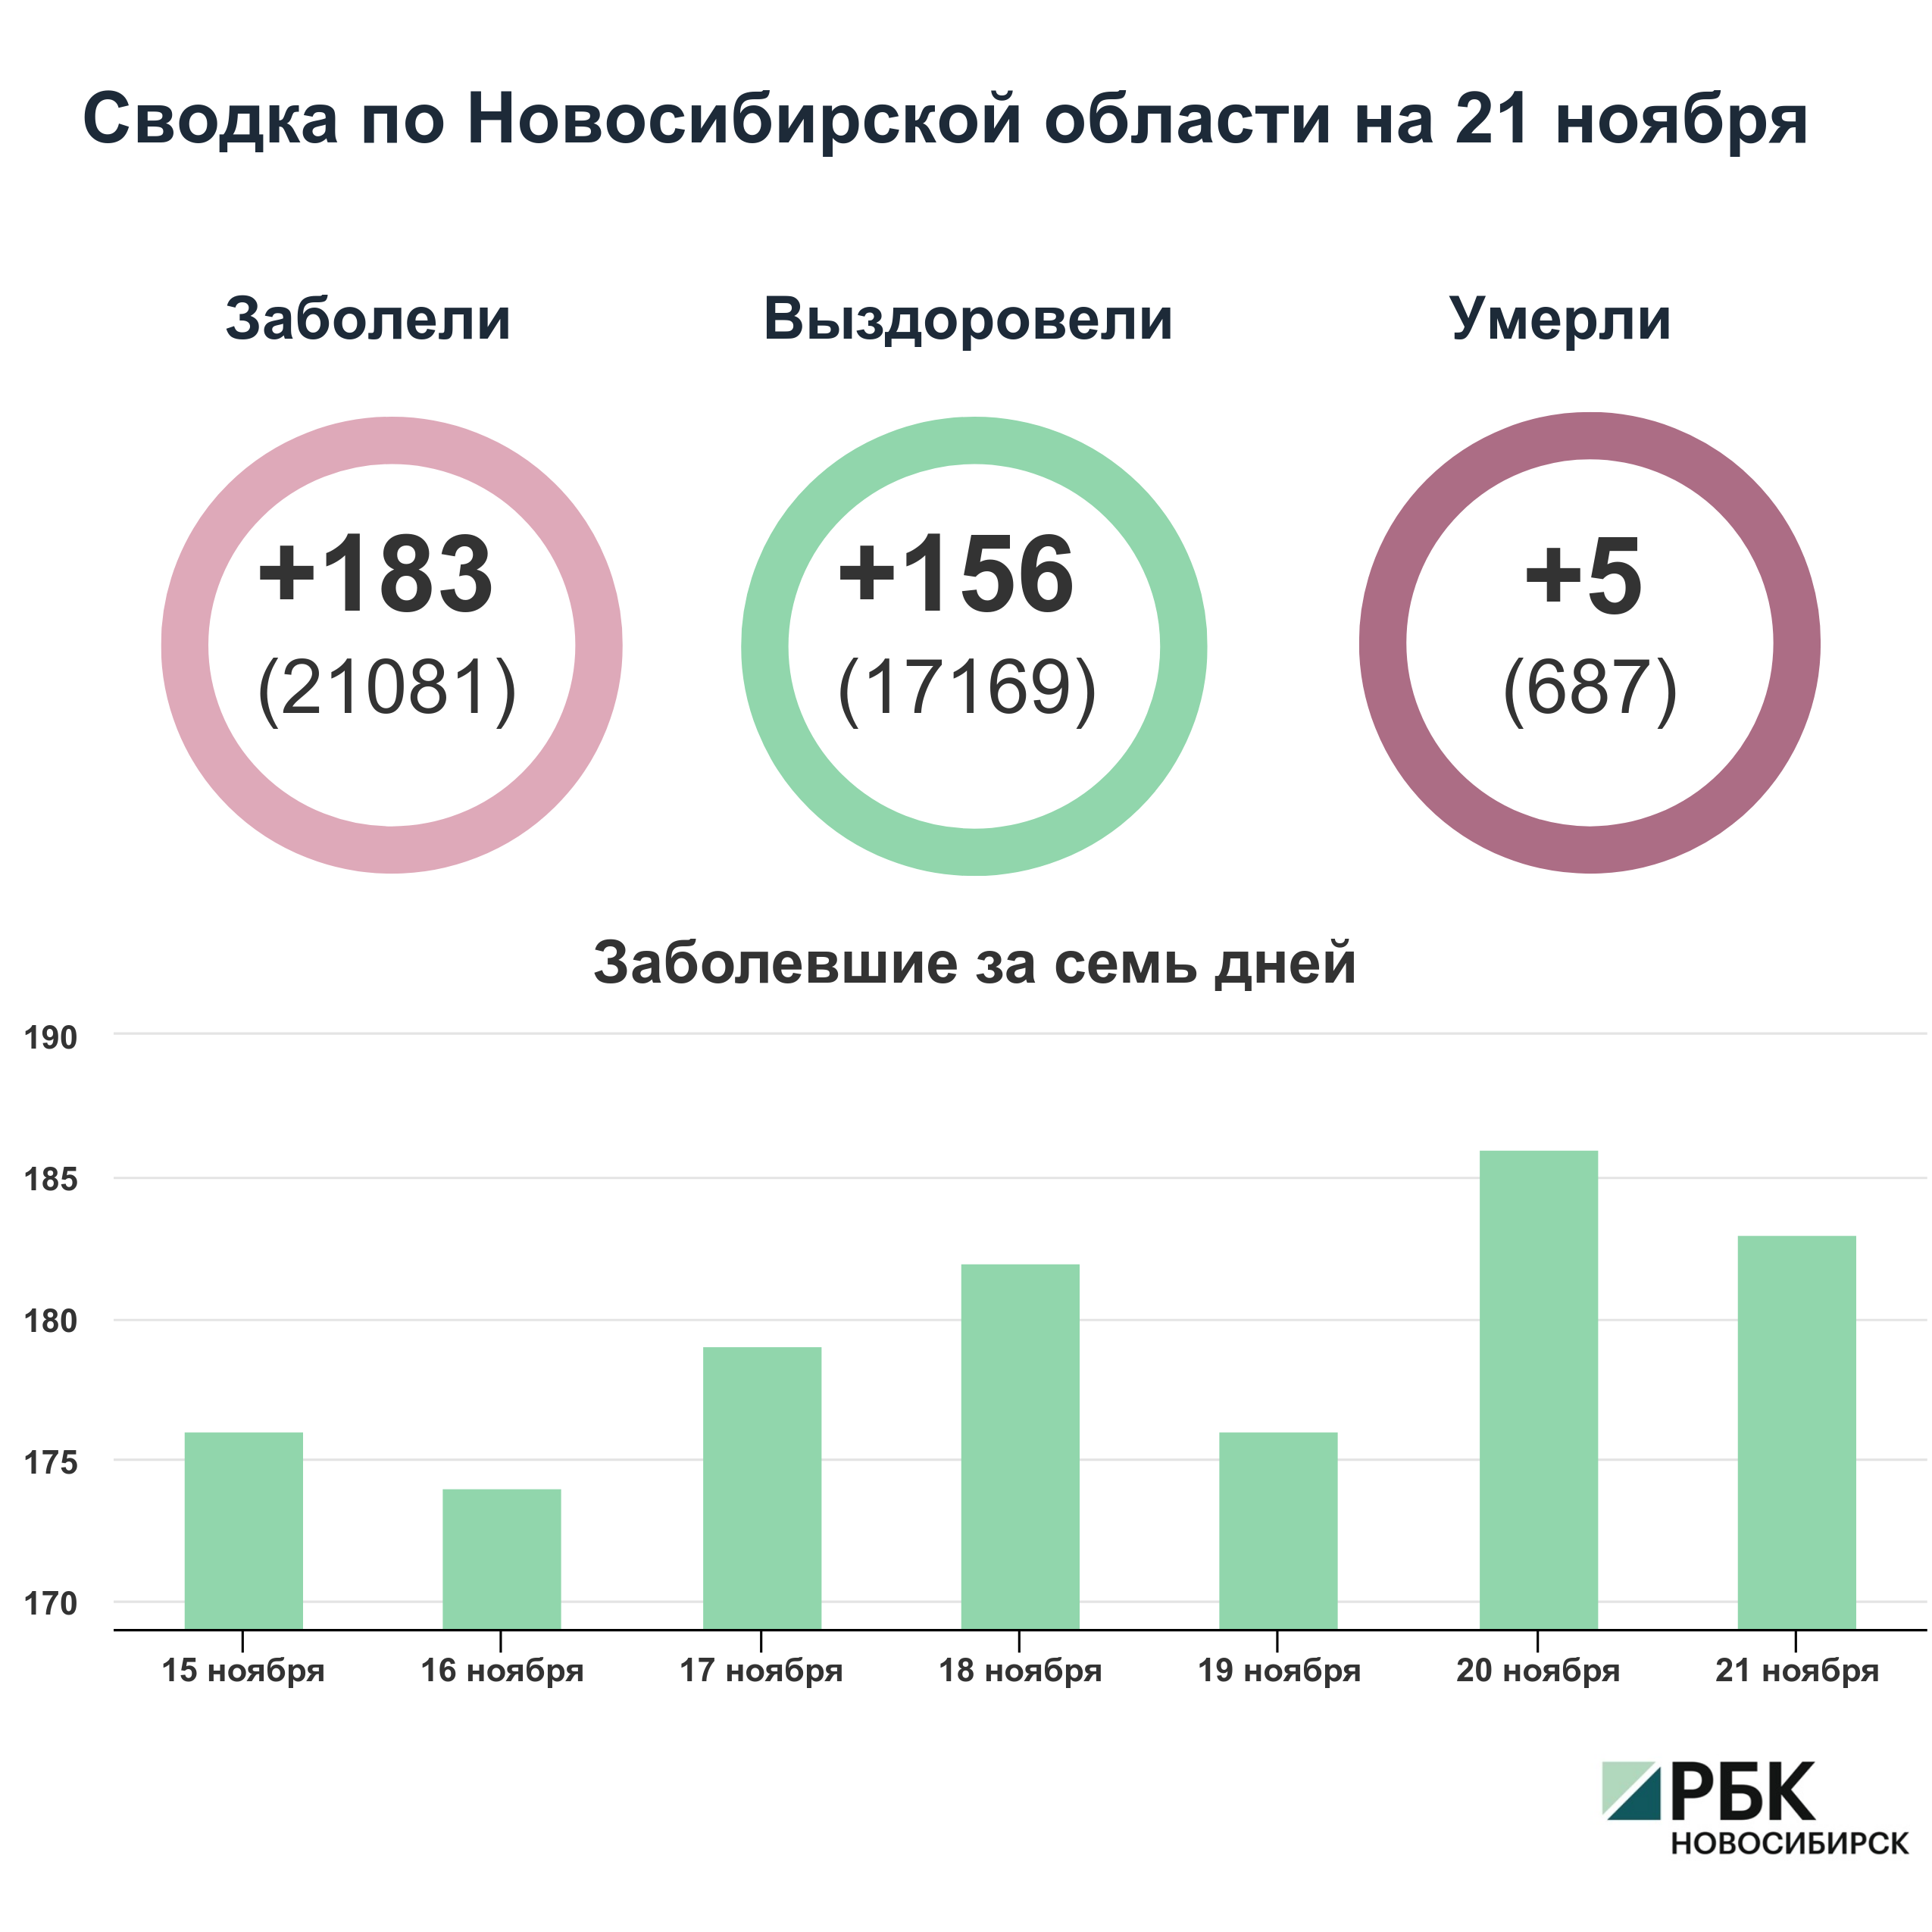 Коронавирус в Новосибирске: сводка на 21 ноября